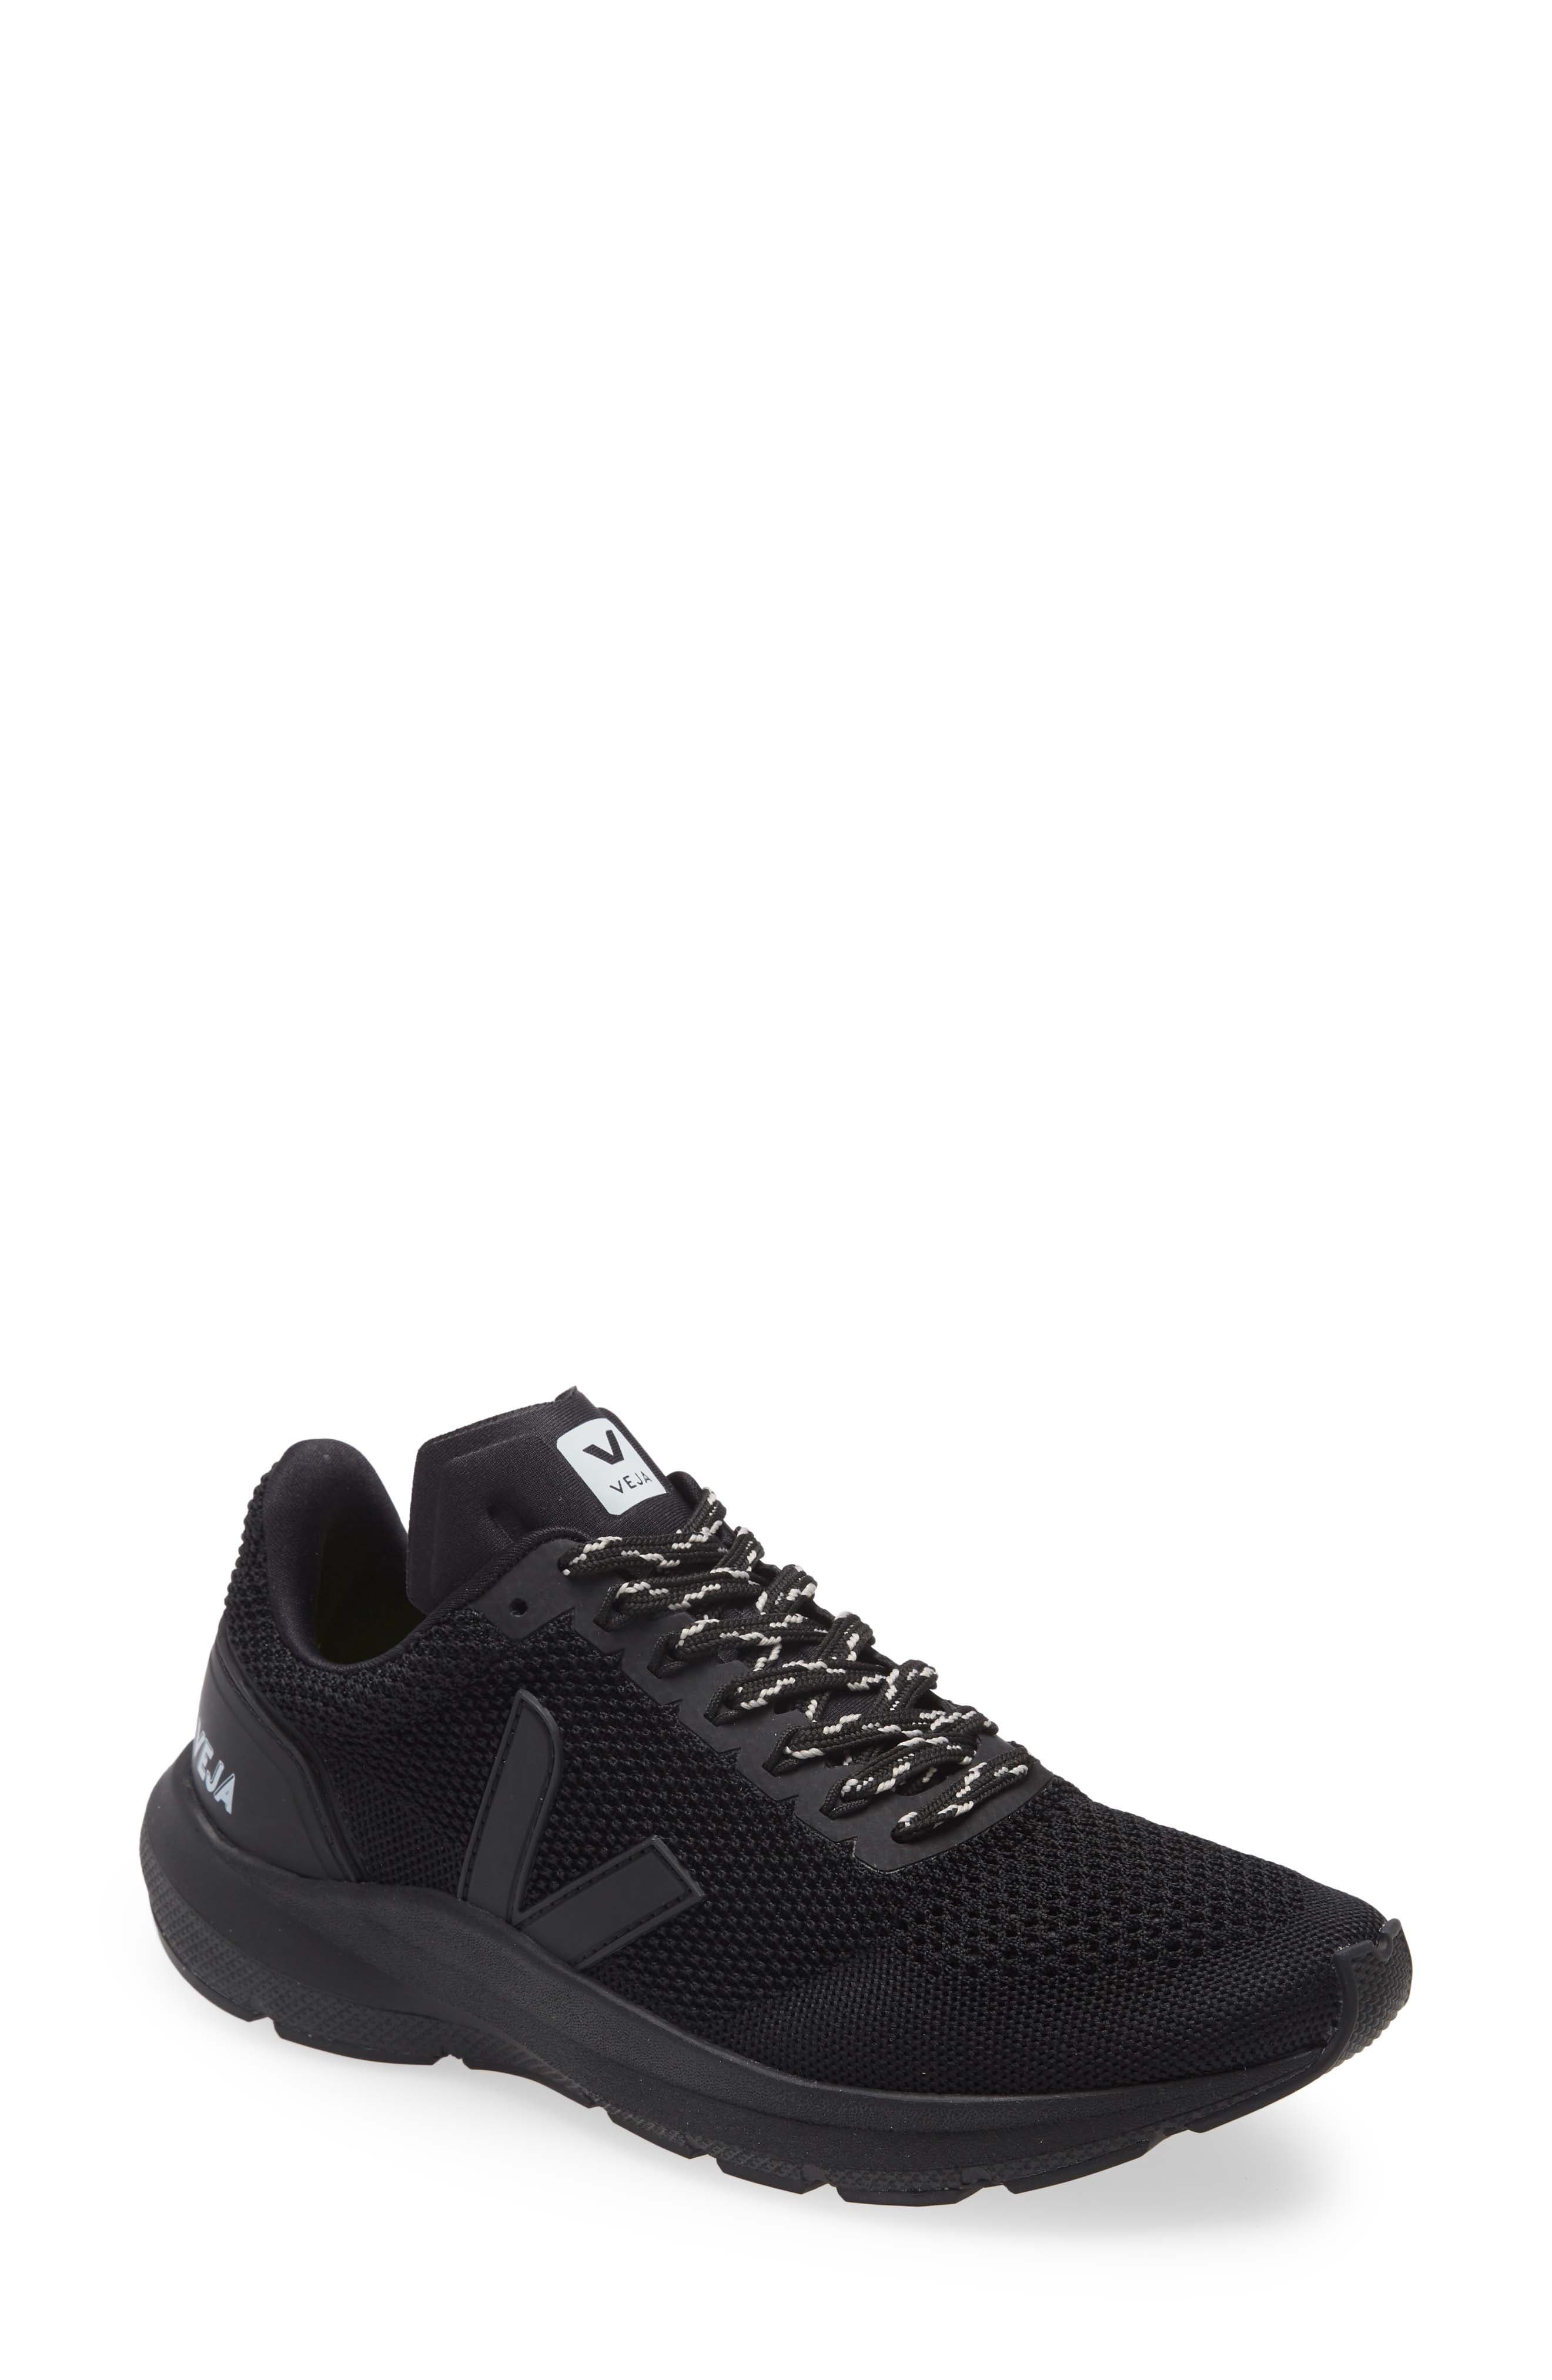 Veja Marlin Running Sneaker in Black/Black at Nordstrom, Size 8Us